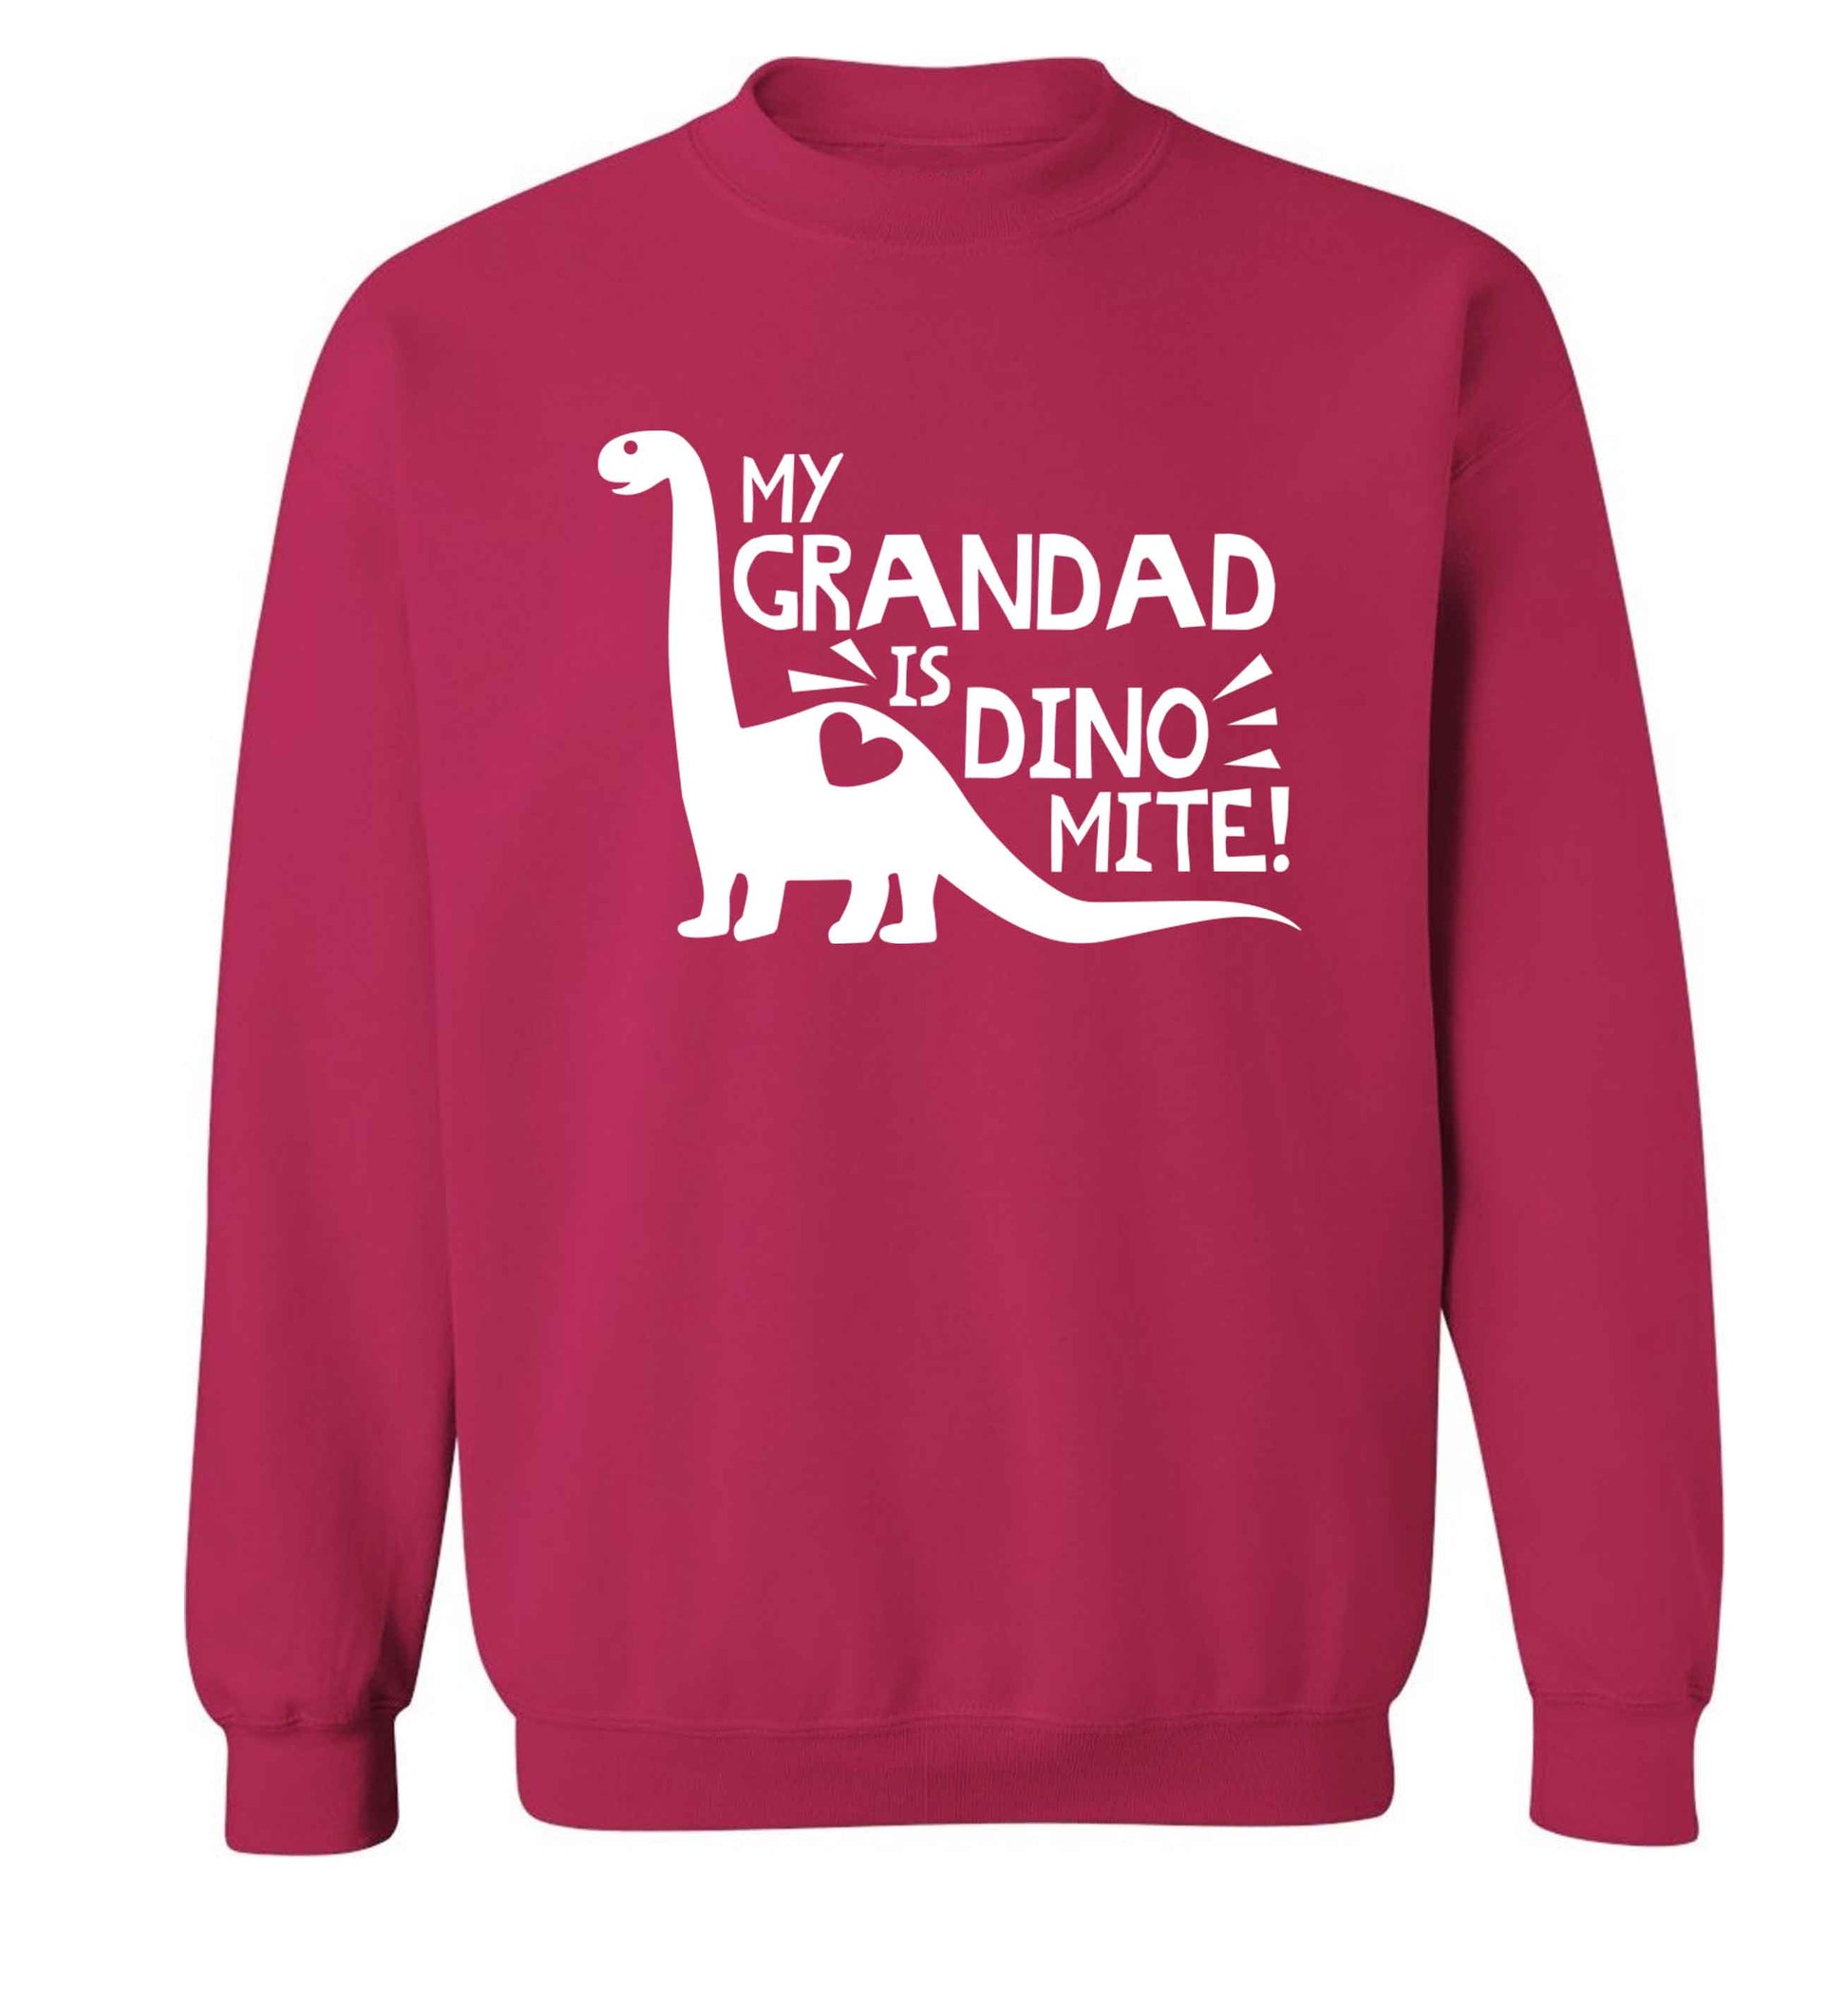 My grandad is dinomite! Adult's unisex pink Sweater 2XL